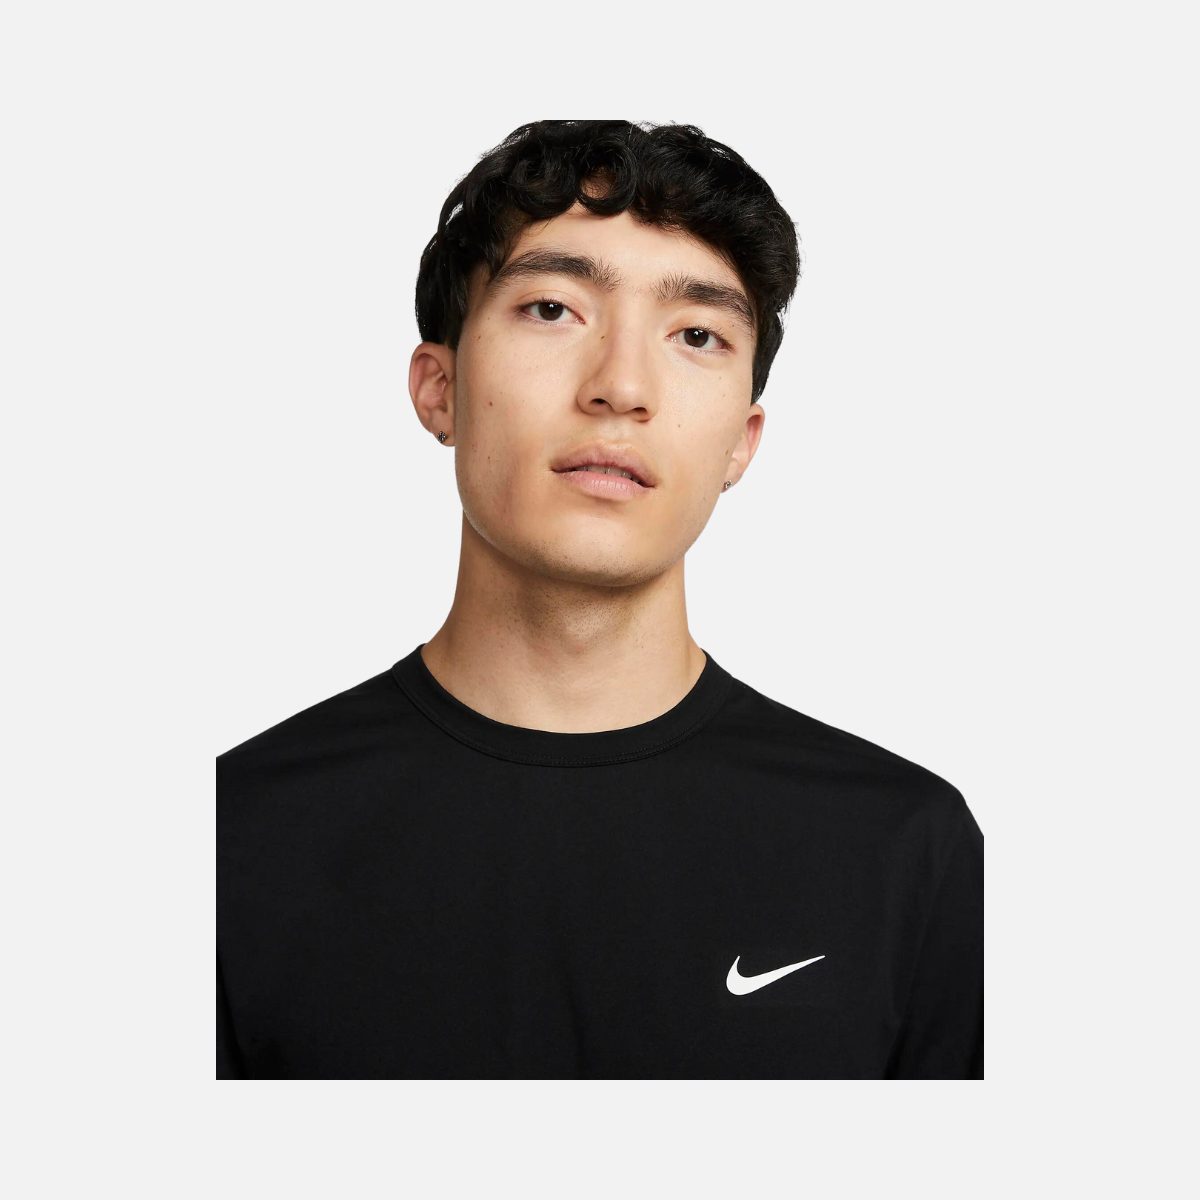 Nike Dri-FIT UV Hyverse Men's Short-Sleeve Fitness Top -Black/White